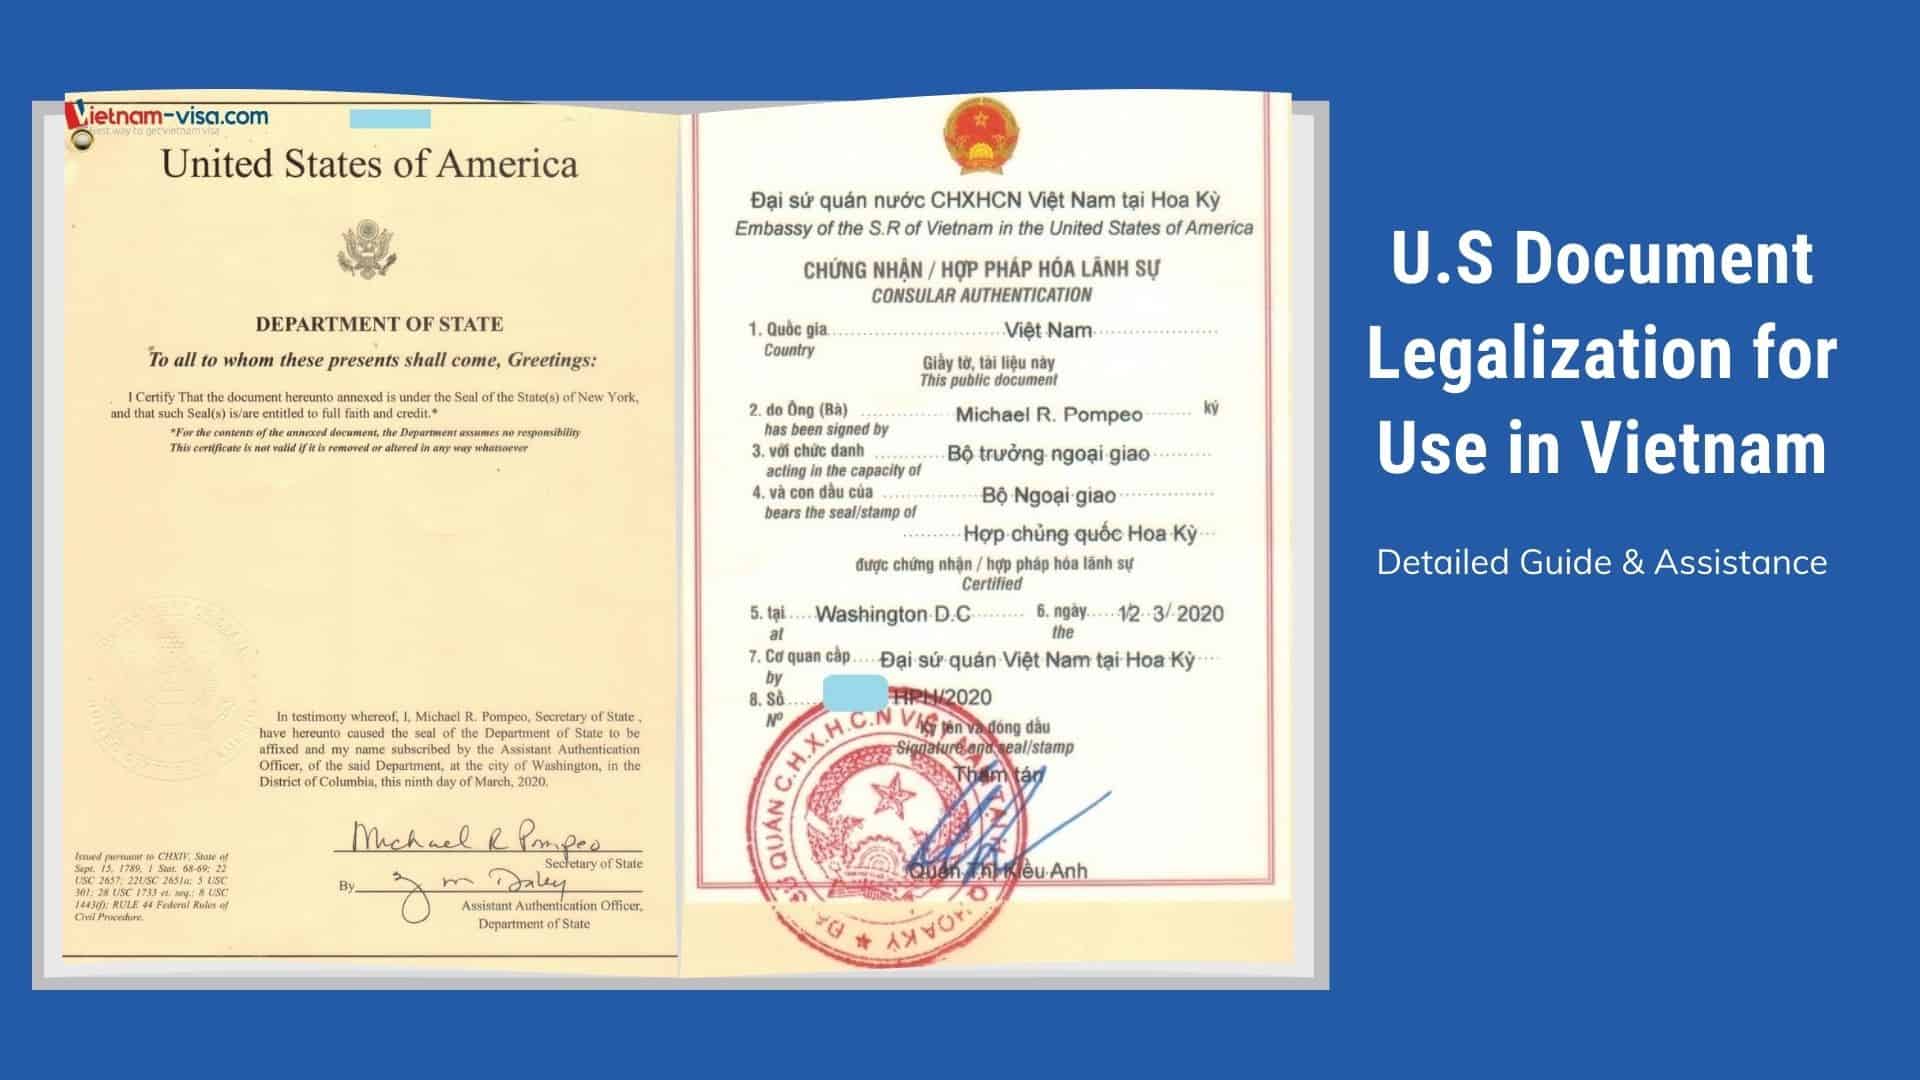 U.S Document Legalization for Use in Vietnam